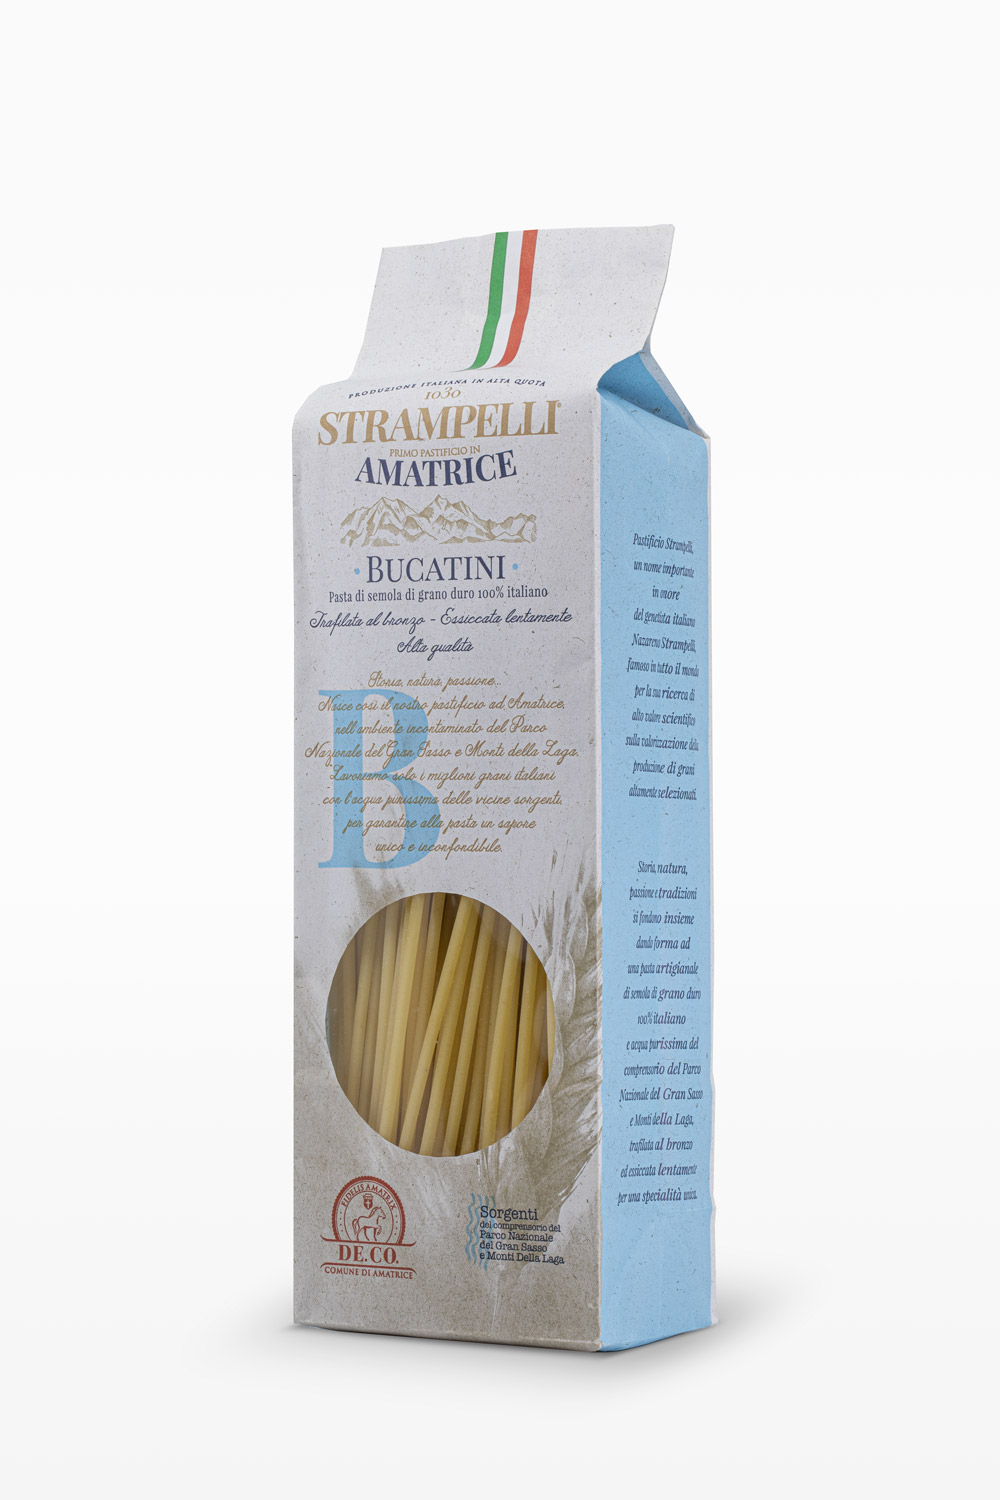 Bucatini - Durum wheat semolina pasta, rough and porous, 100% Italian wheat, slow drying at low temperature.